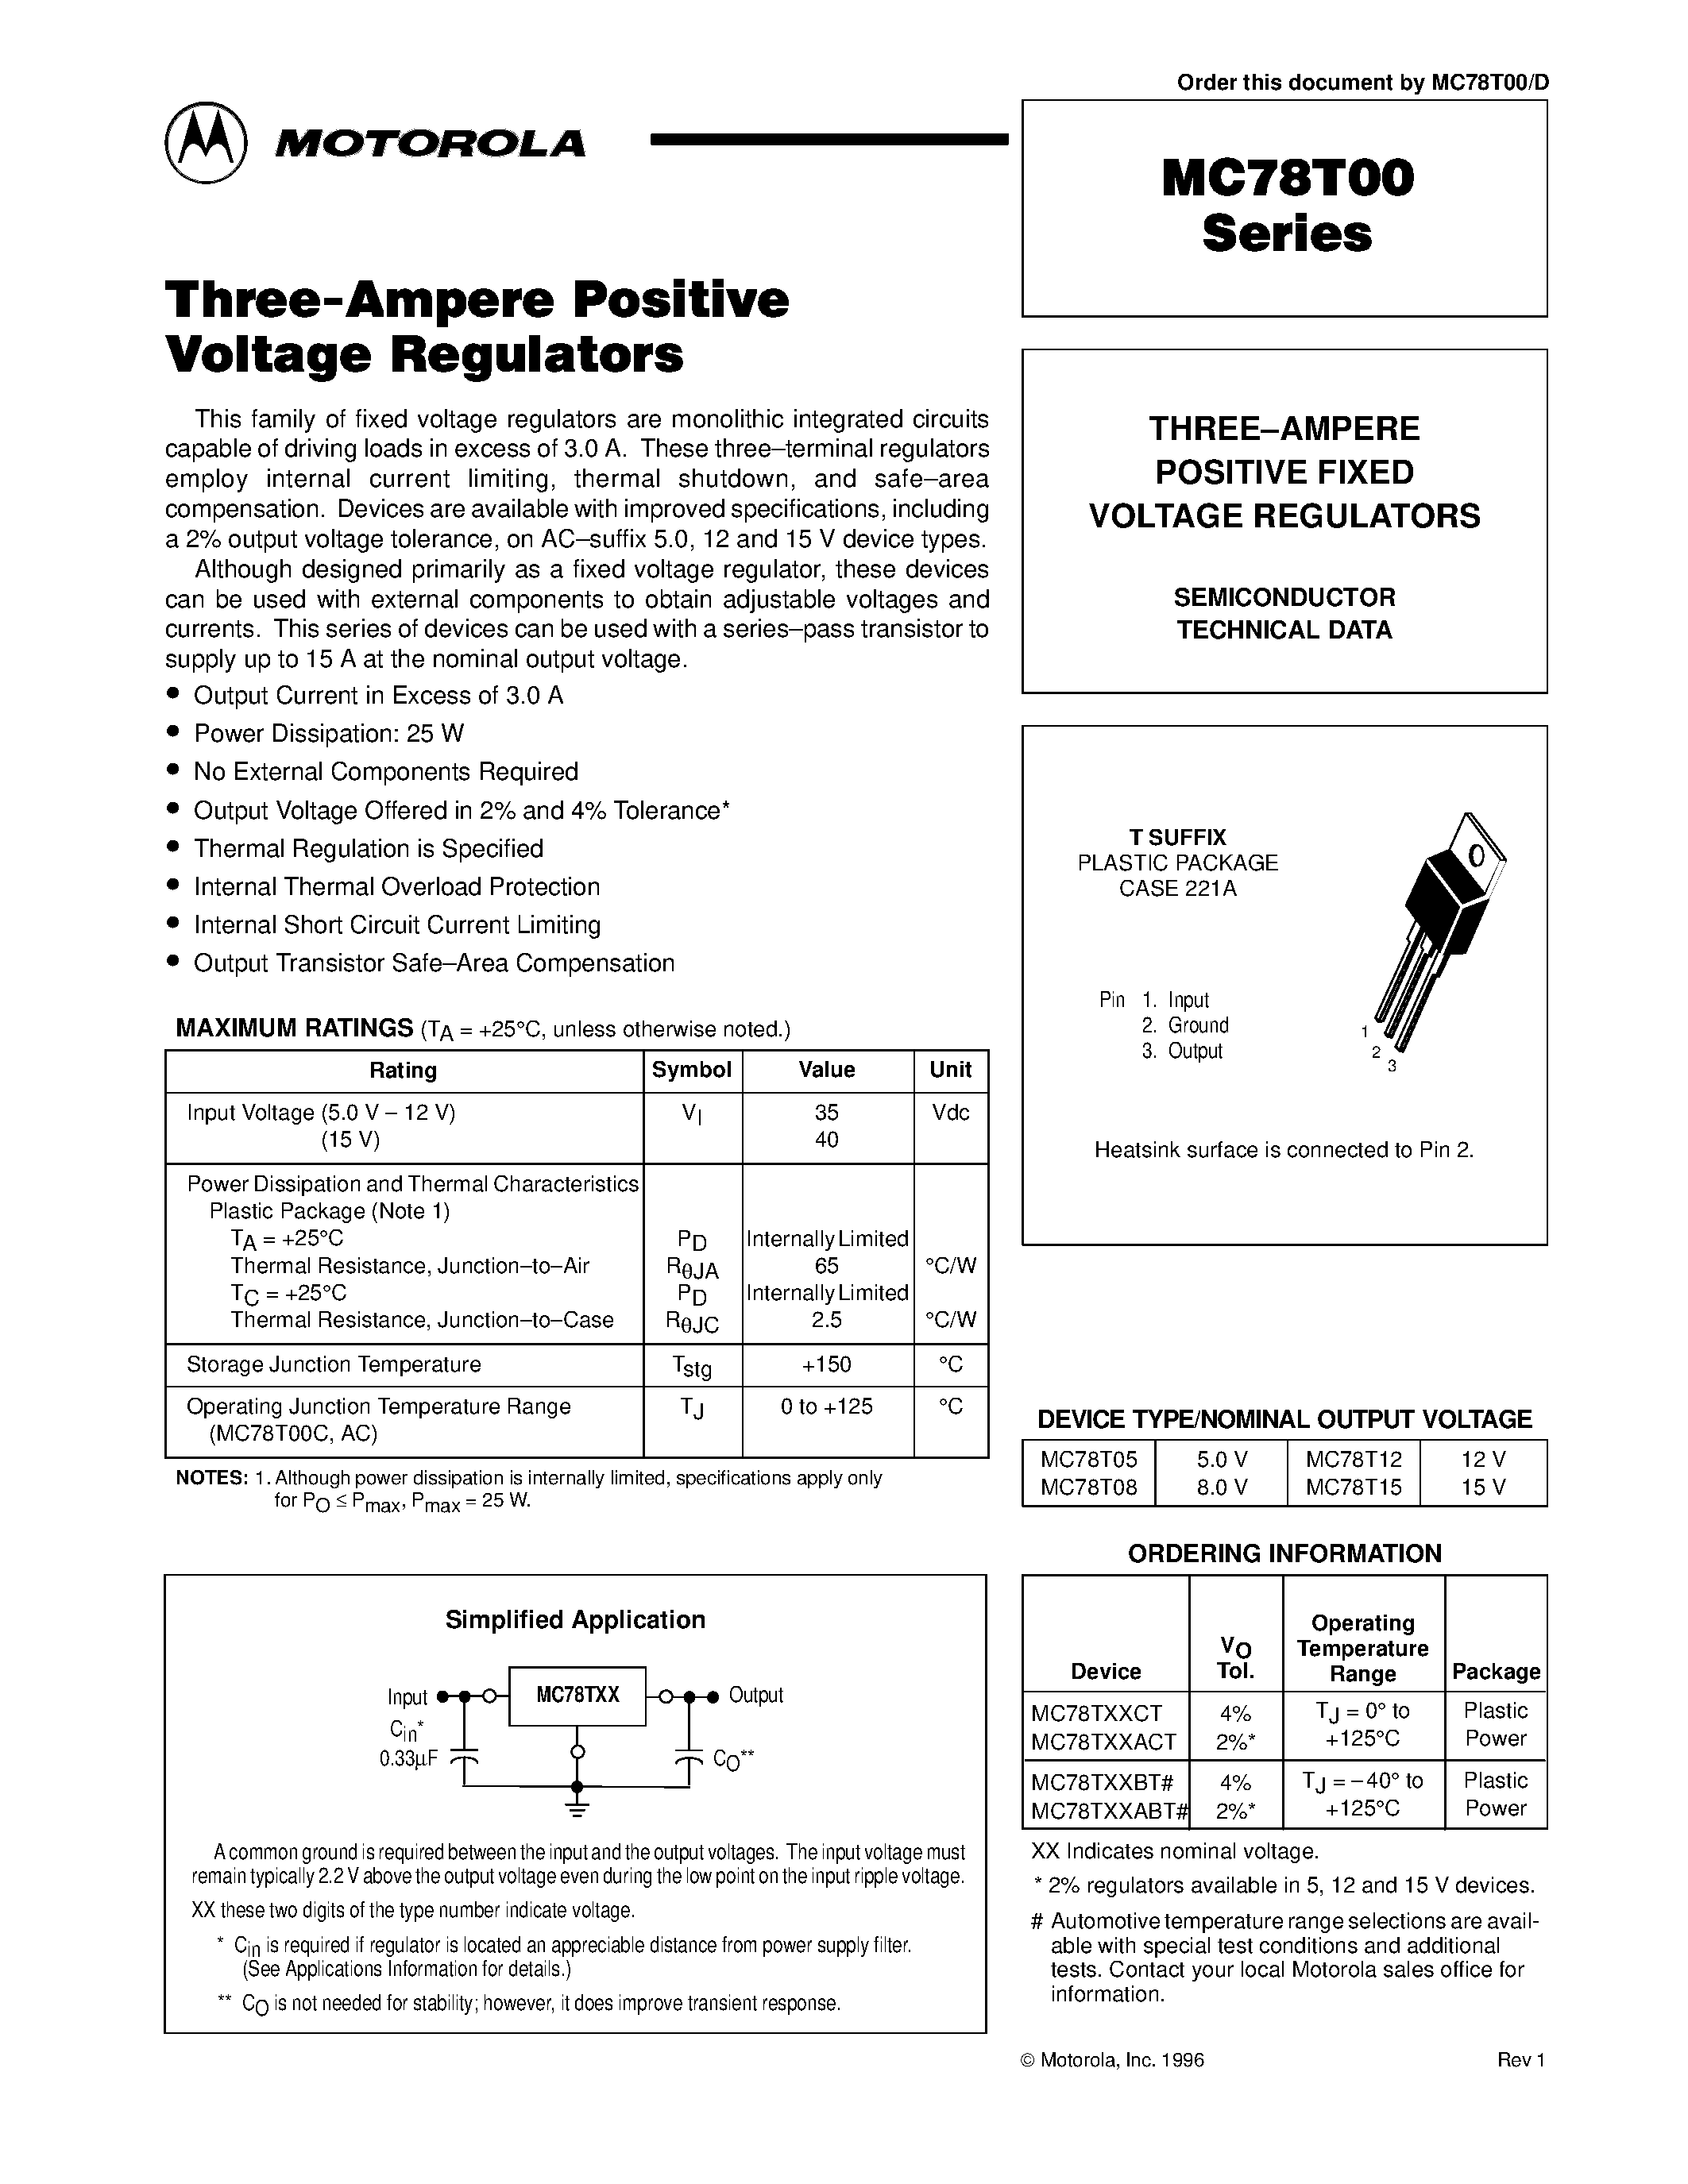 Datasheet MC78T15ACT - THREE-AMPERE POSITIVE FIXED VOLTAGE REGULATORS page 1